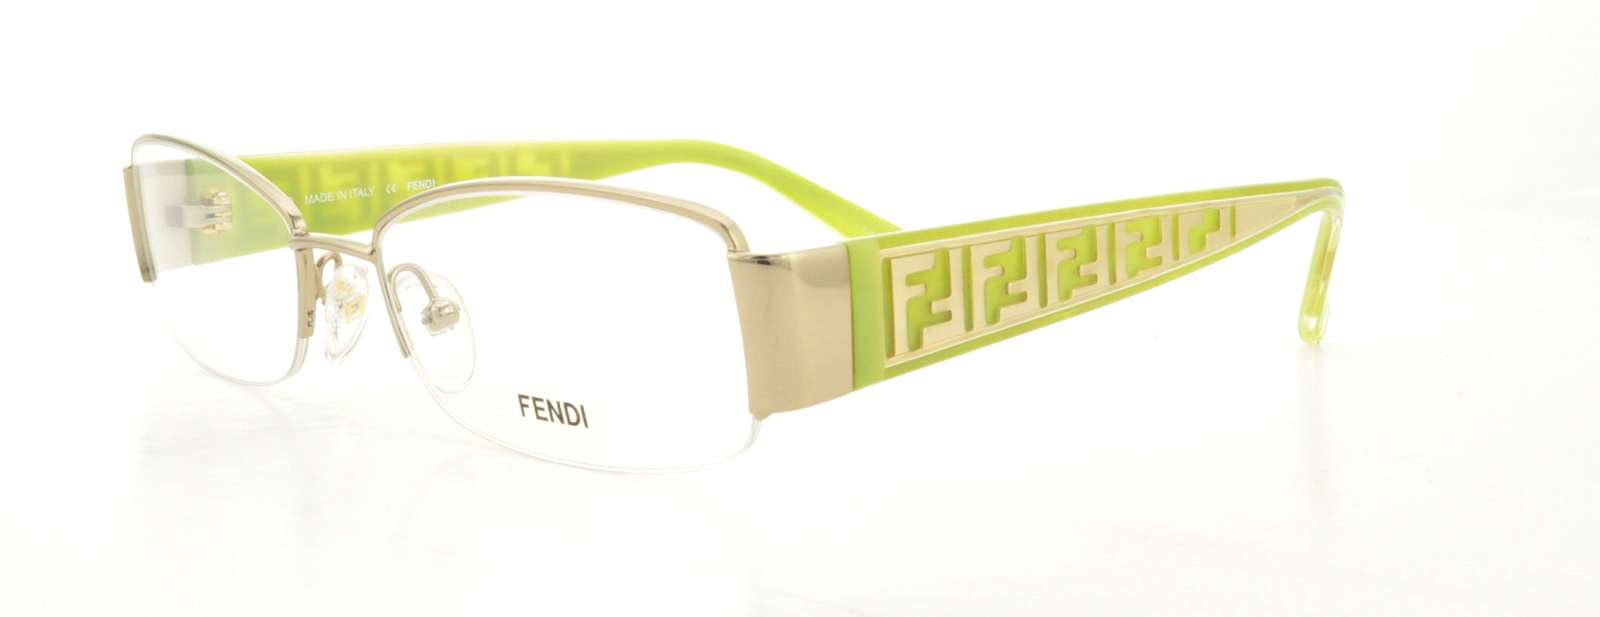 Picture of Fendi Eyeglasses 984